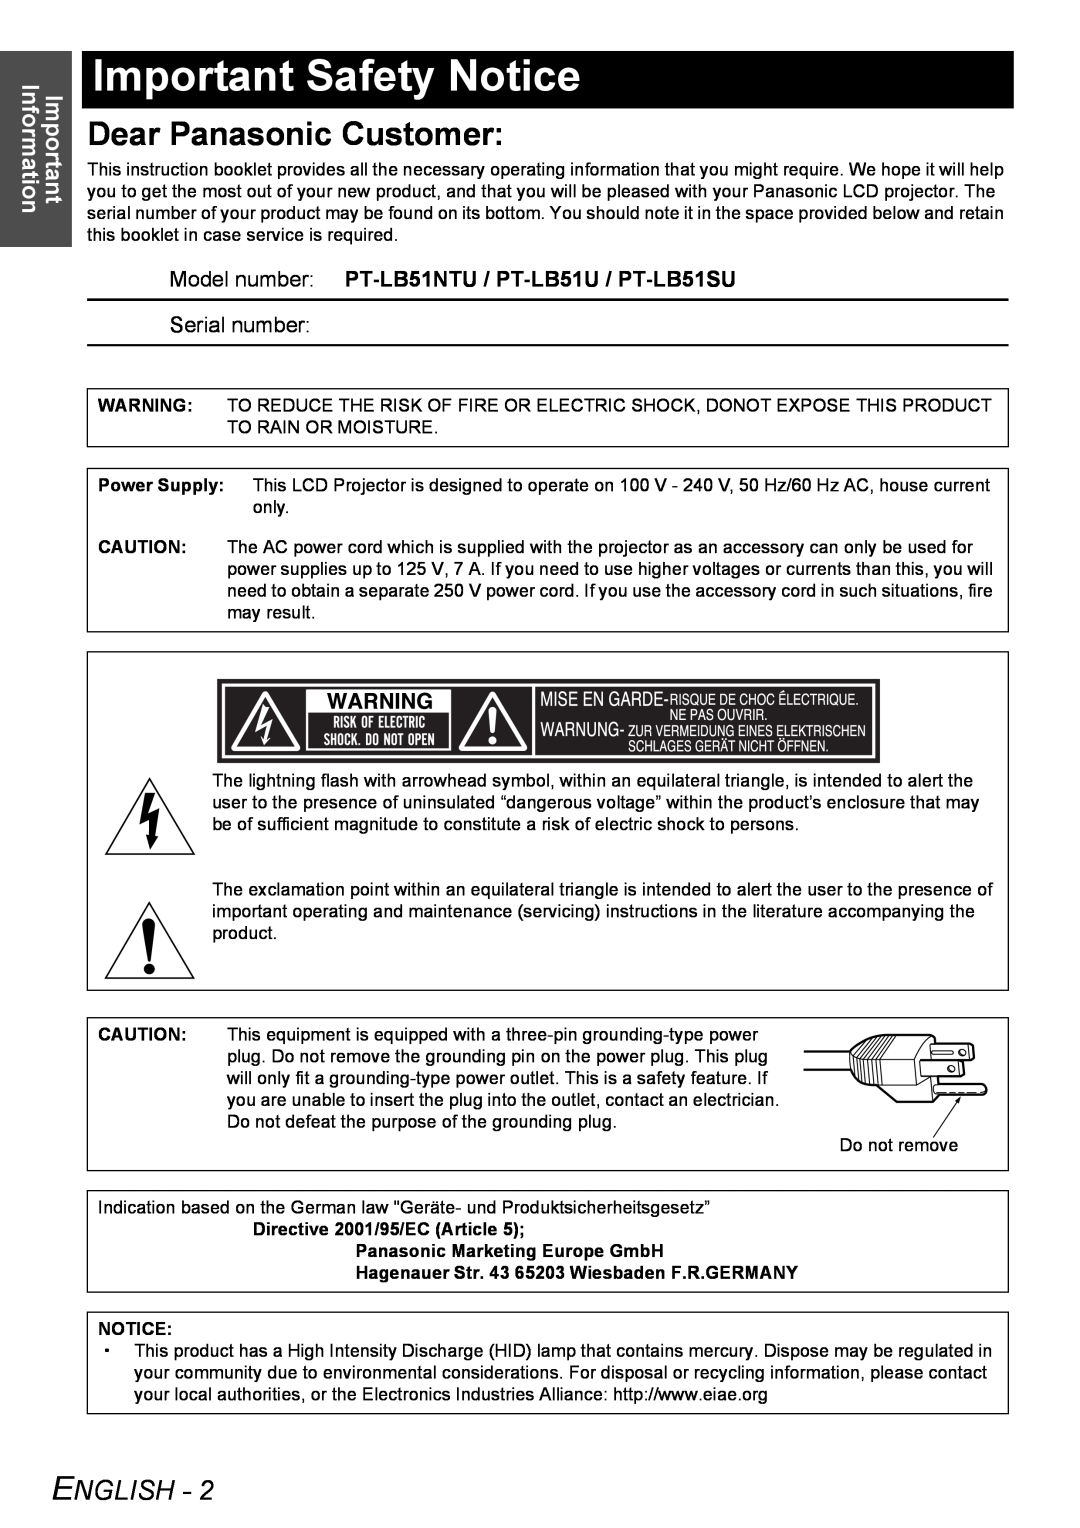 Panasonic PT-LB51NTU Important Safety Notice, Dear Panasonic Customer, English, Important Information 